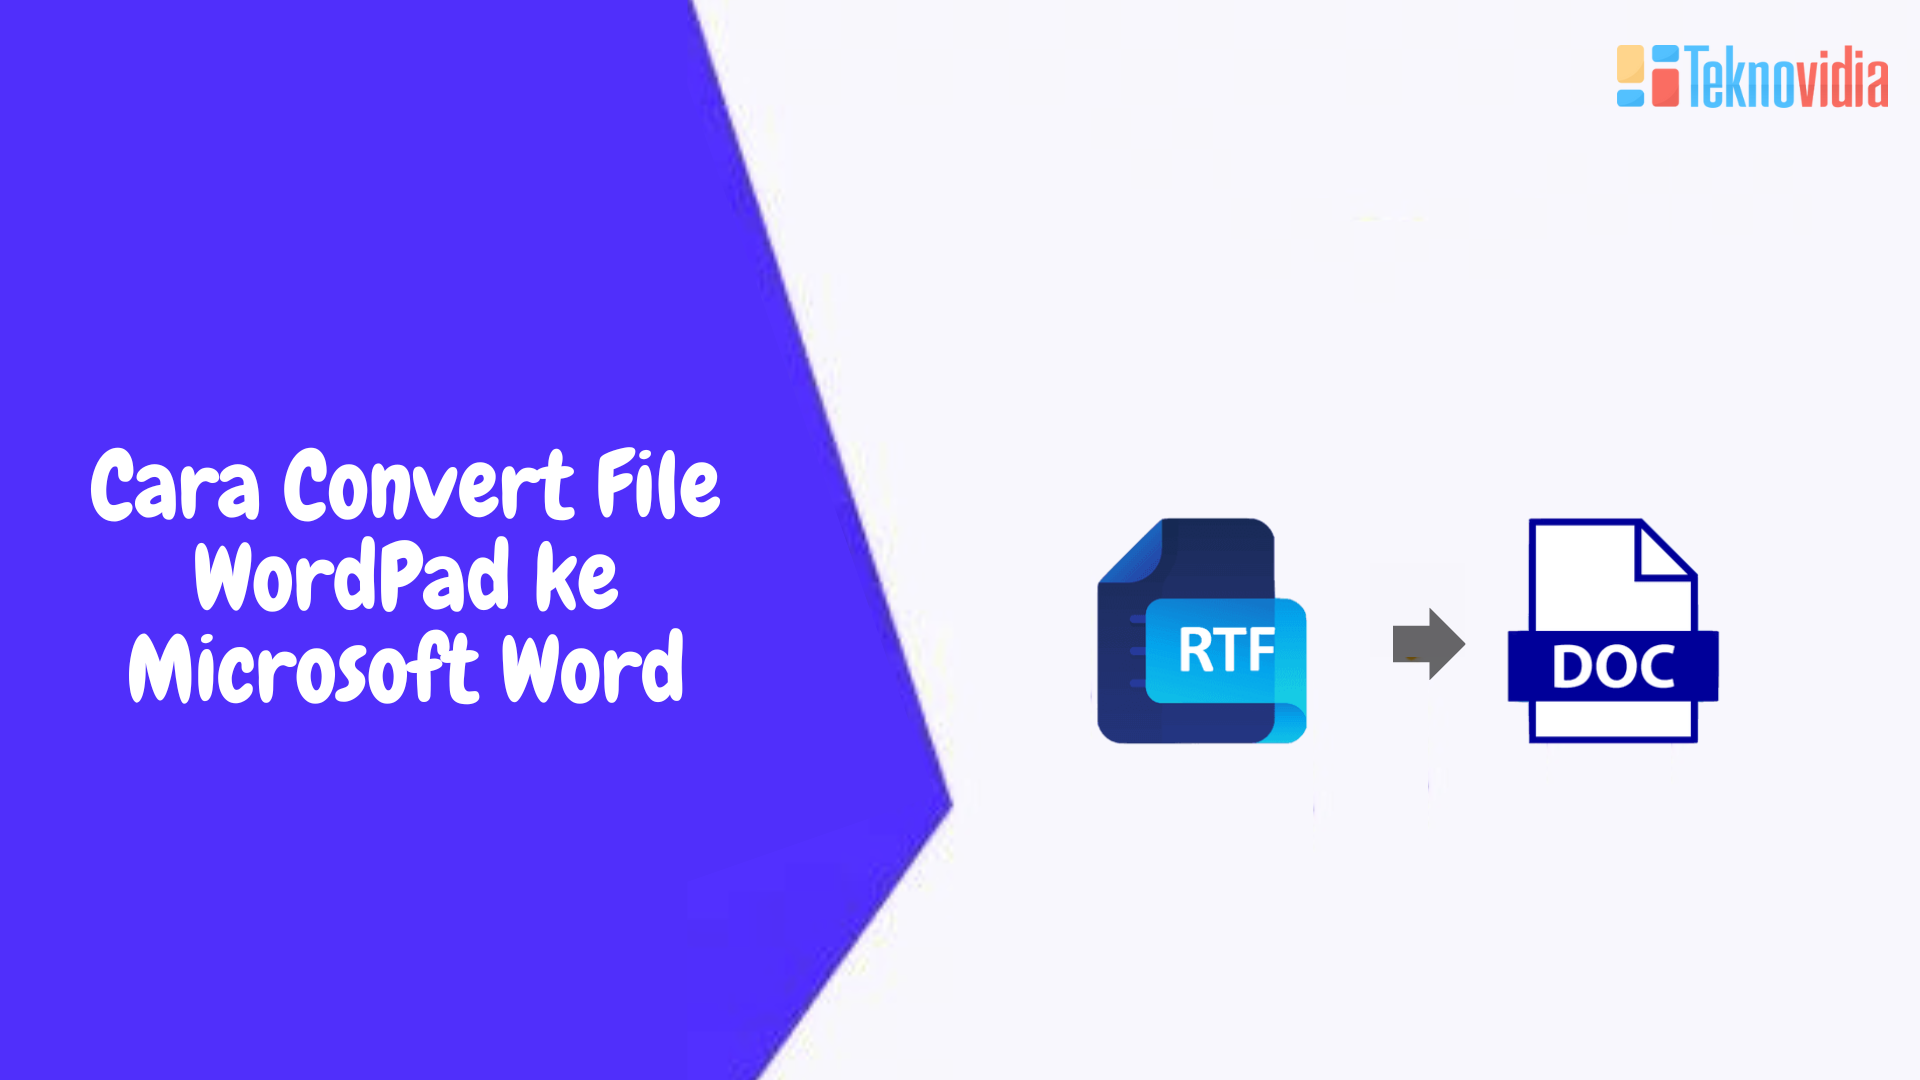 Cara Convert File WordPad ke Microsoft Word